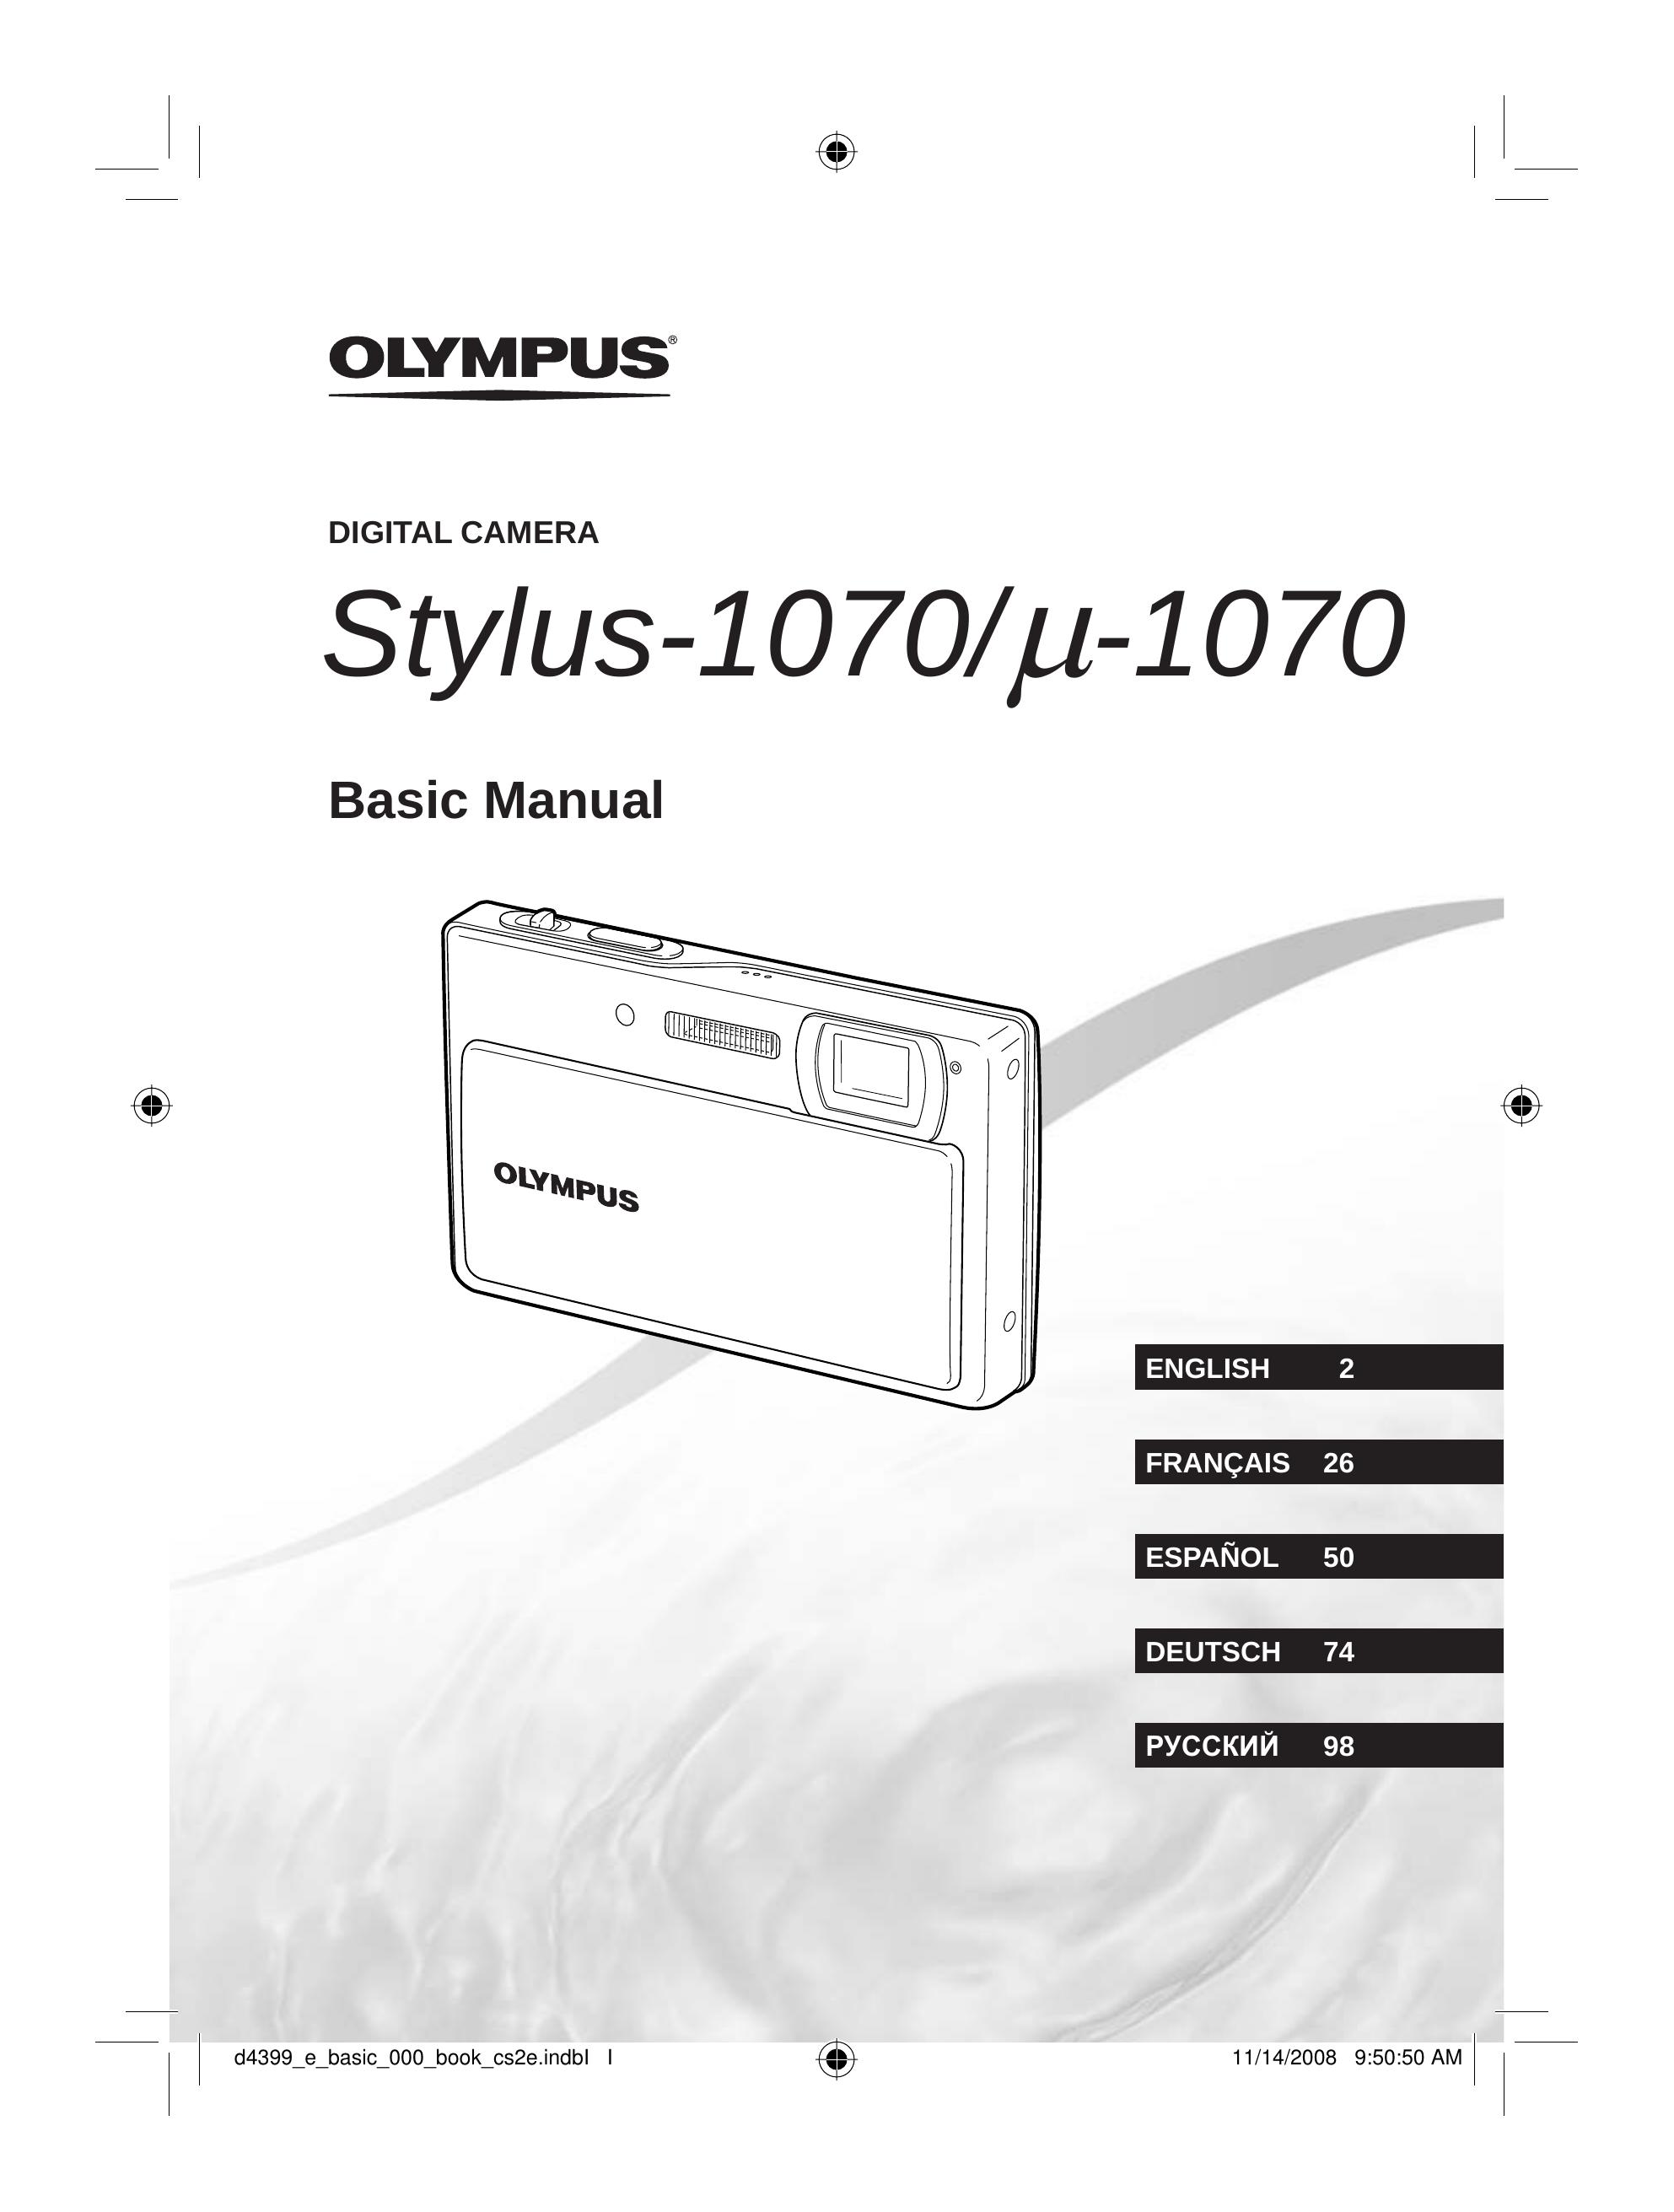 IBM Stylus-1070 Digital Camera User Manual